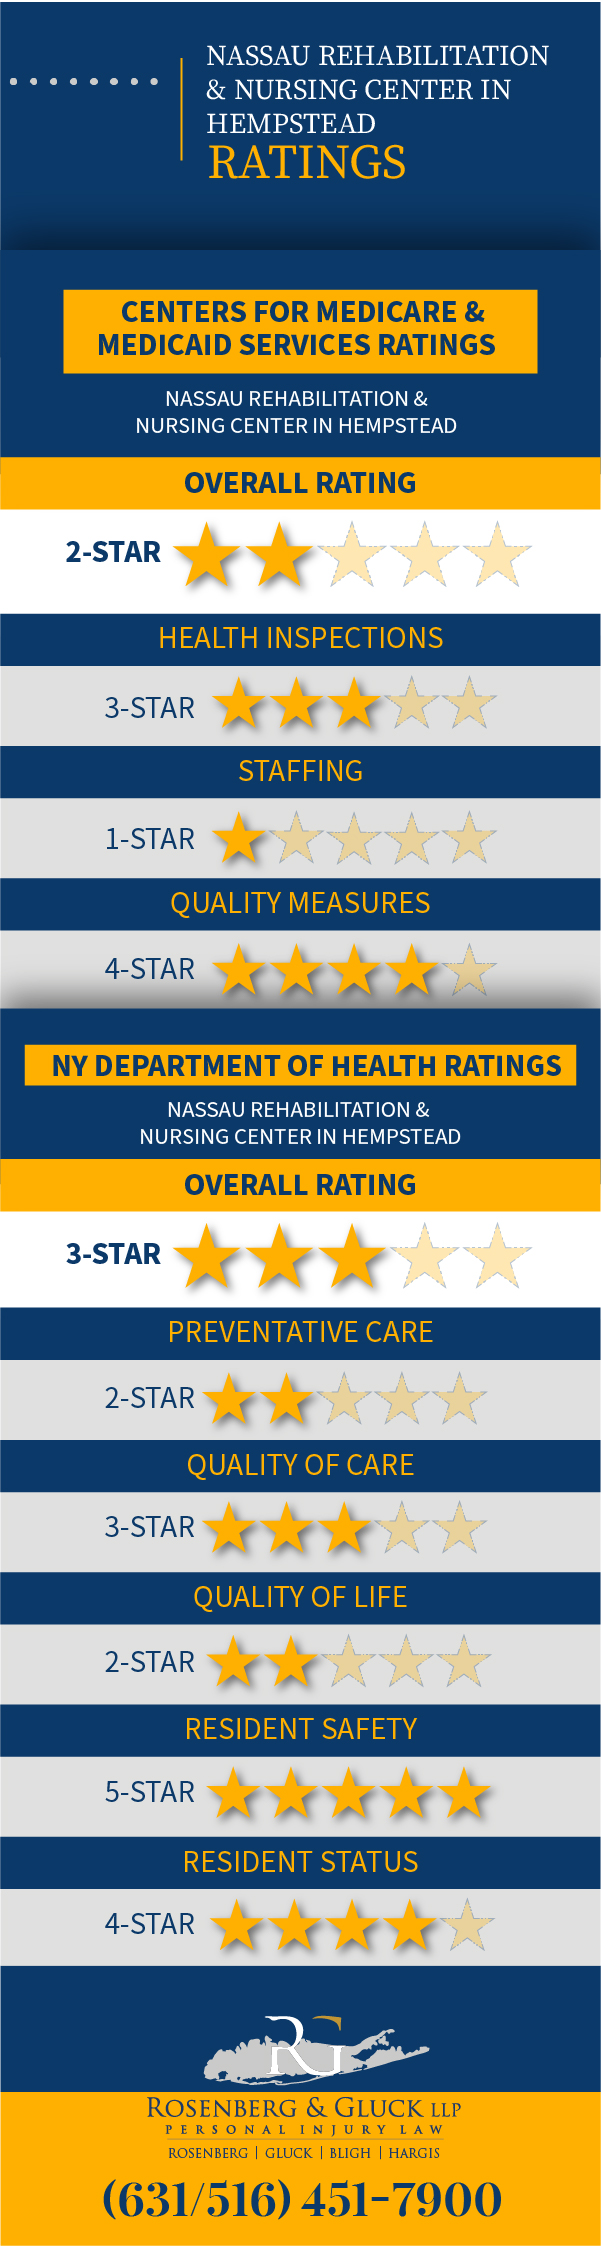 Nassau Rehabilitation & Nursing Center in Hempstead Violations and Ratings Infographic